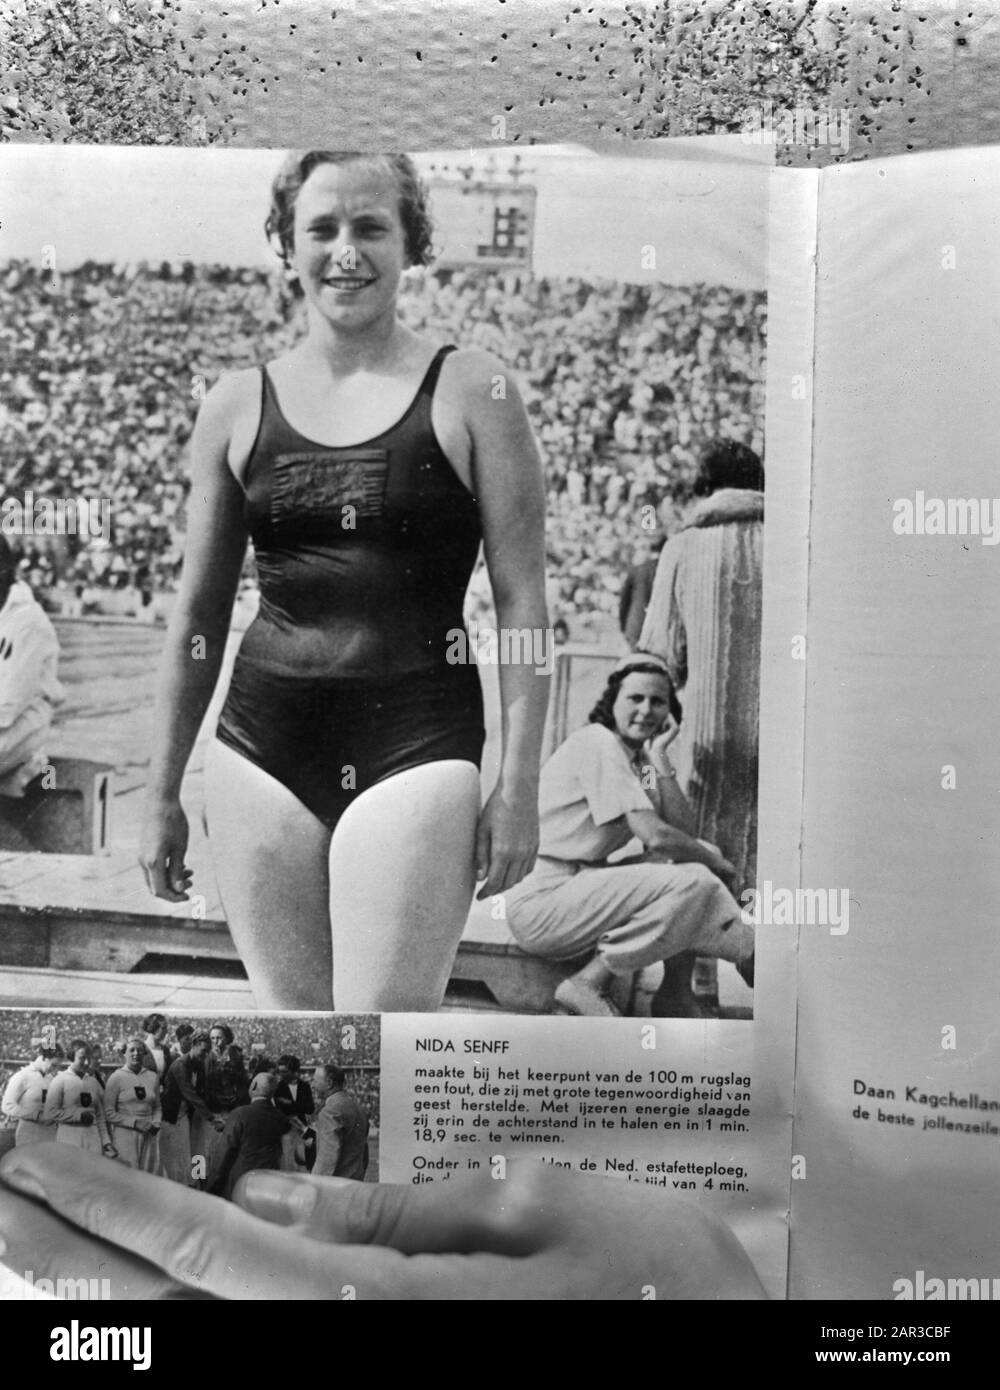 Nida Senff (nuotatore) alle Olimpiadi del 1936 Data: 1936 Parole Chiave: Nuotatori Foto Stock